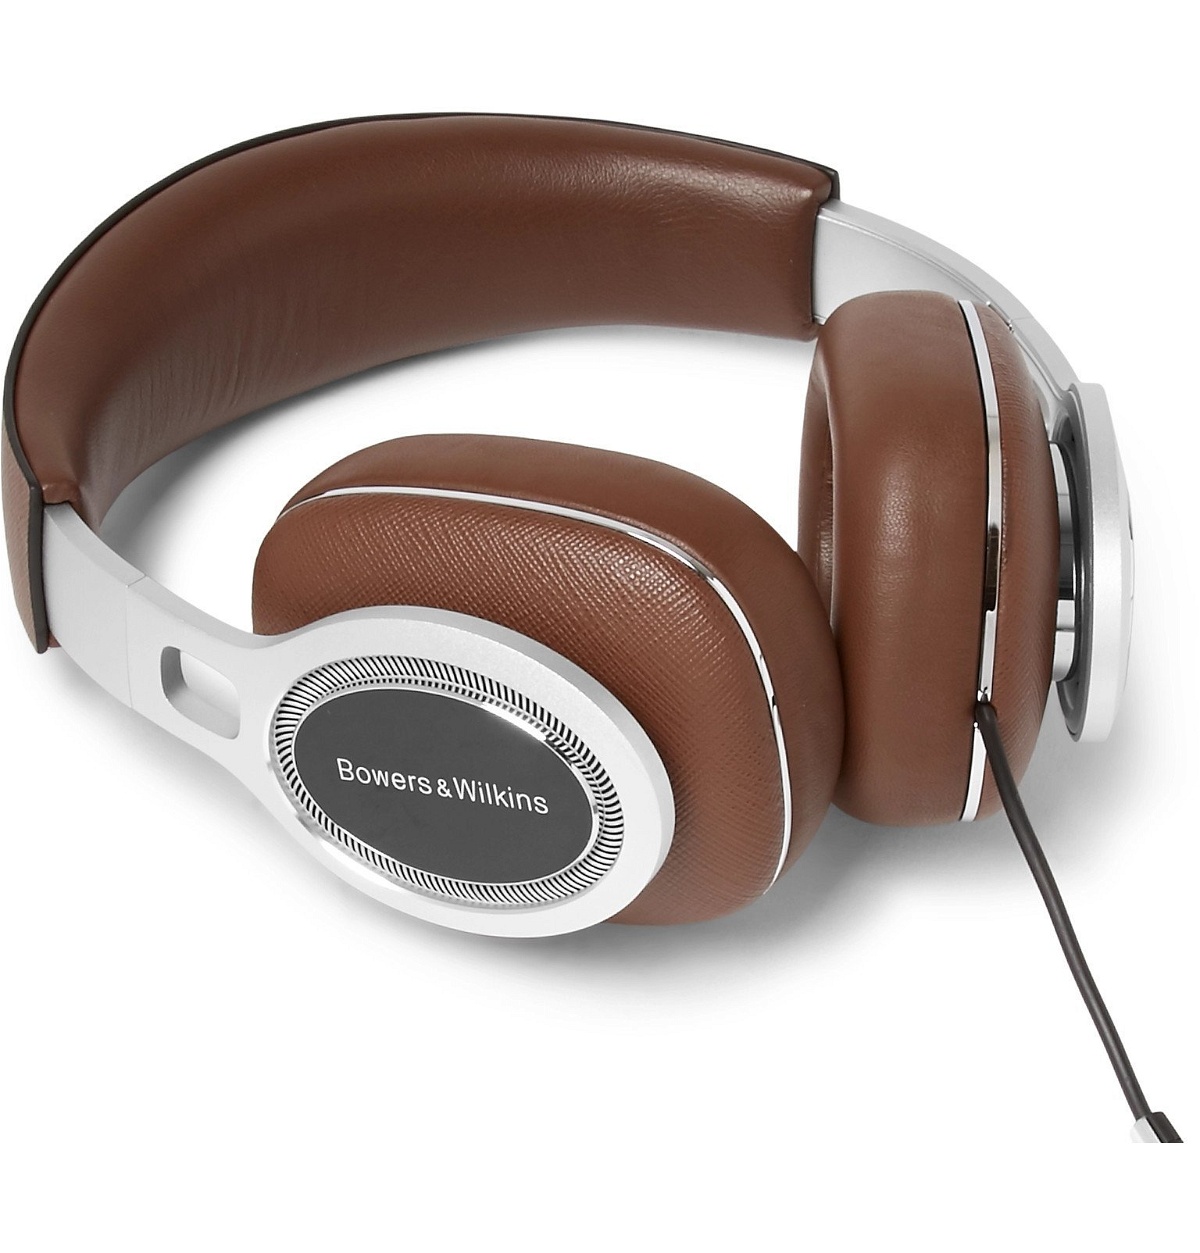 Bowers & Wilkins - P9 Signature Cross-Grain Leather Headphones